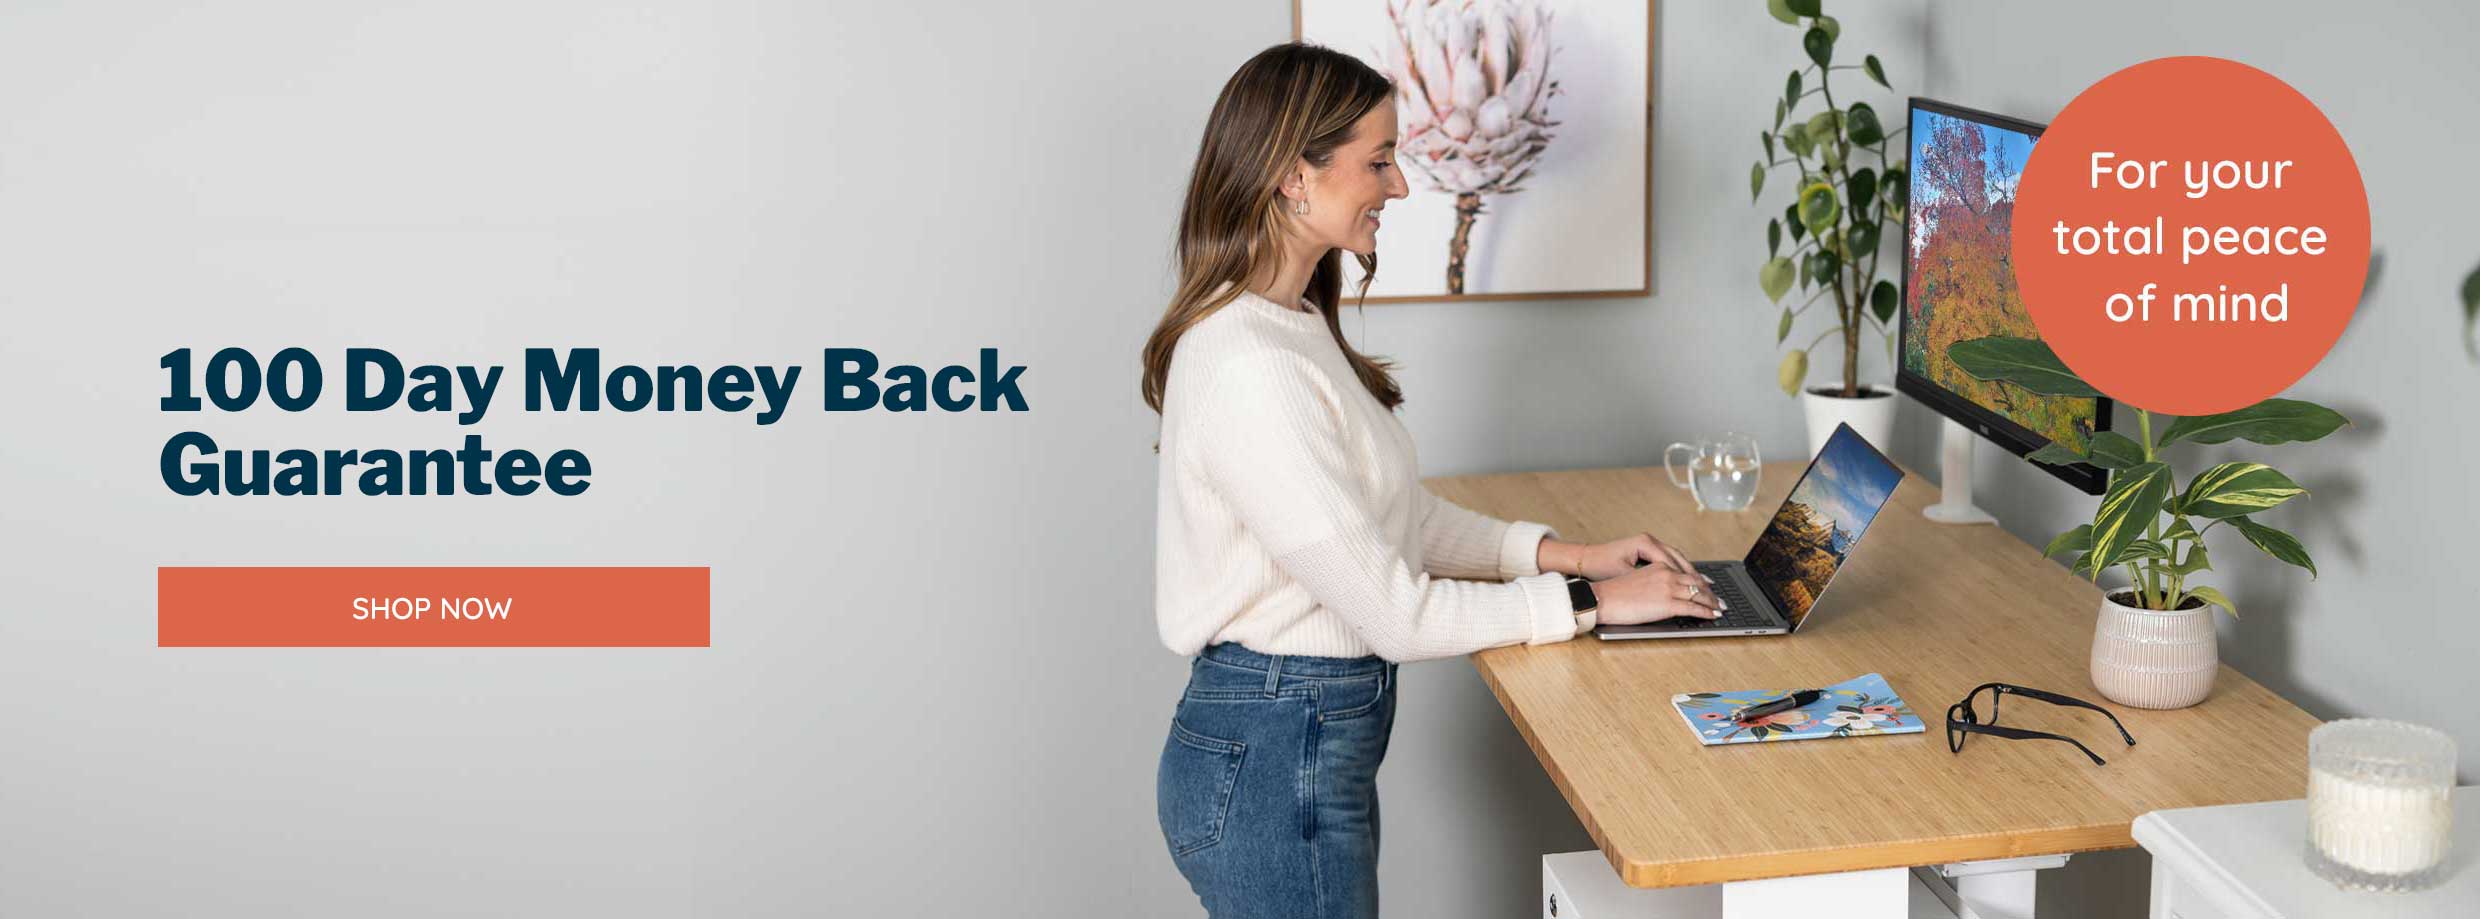 100 Day Money Back Guarantee on Standing Desks 